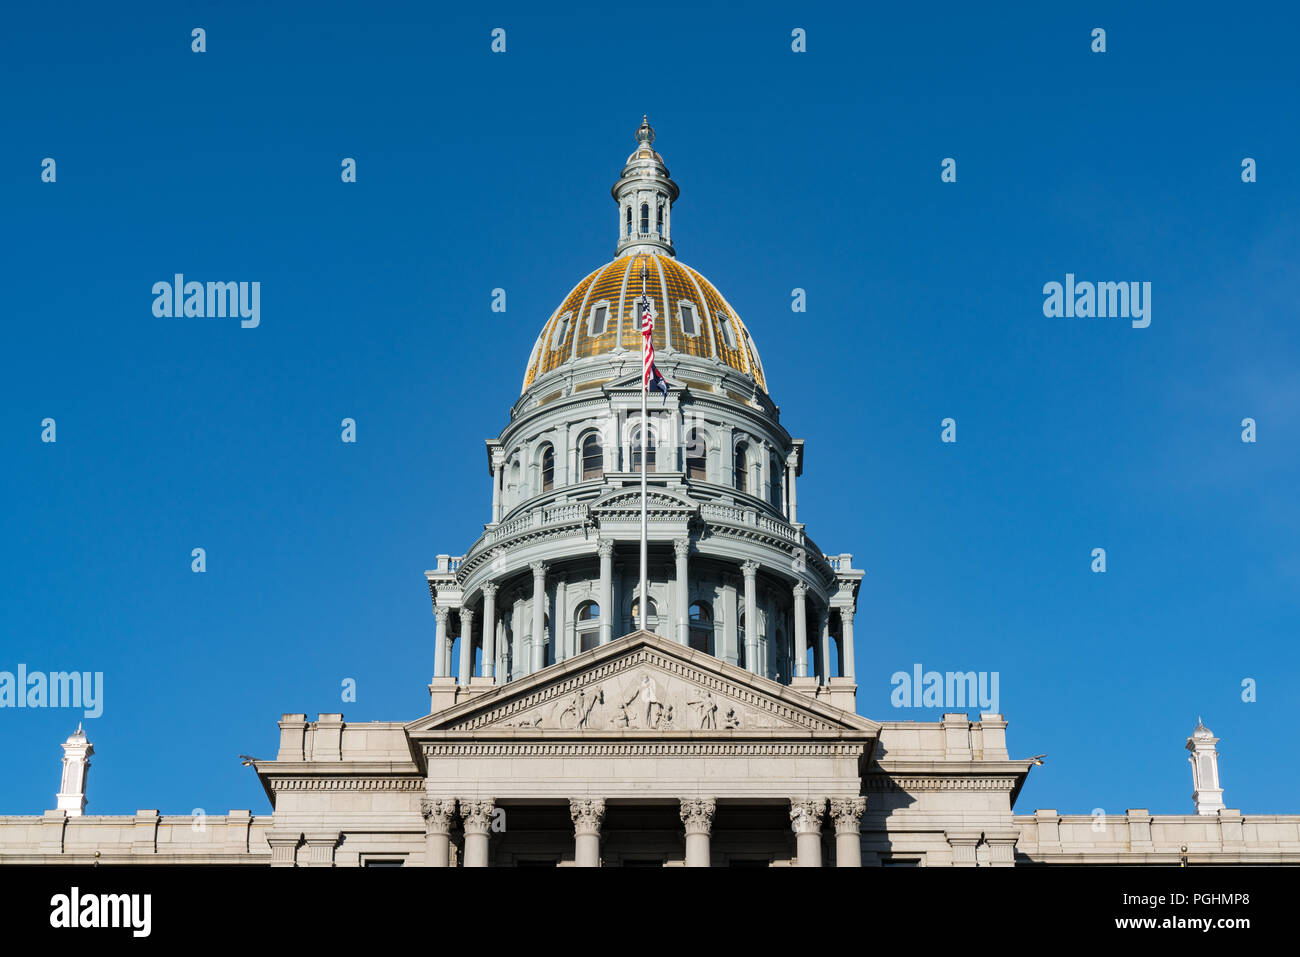 Dome of the Colorado State Capital Building in Denver, Colorado Stock Photo